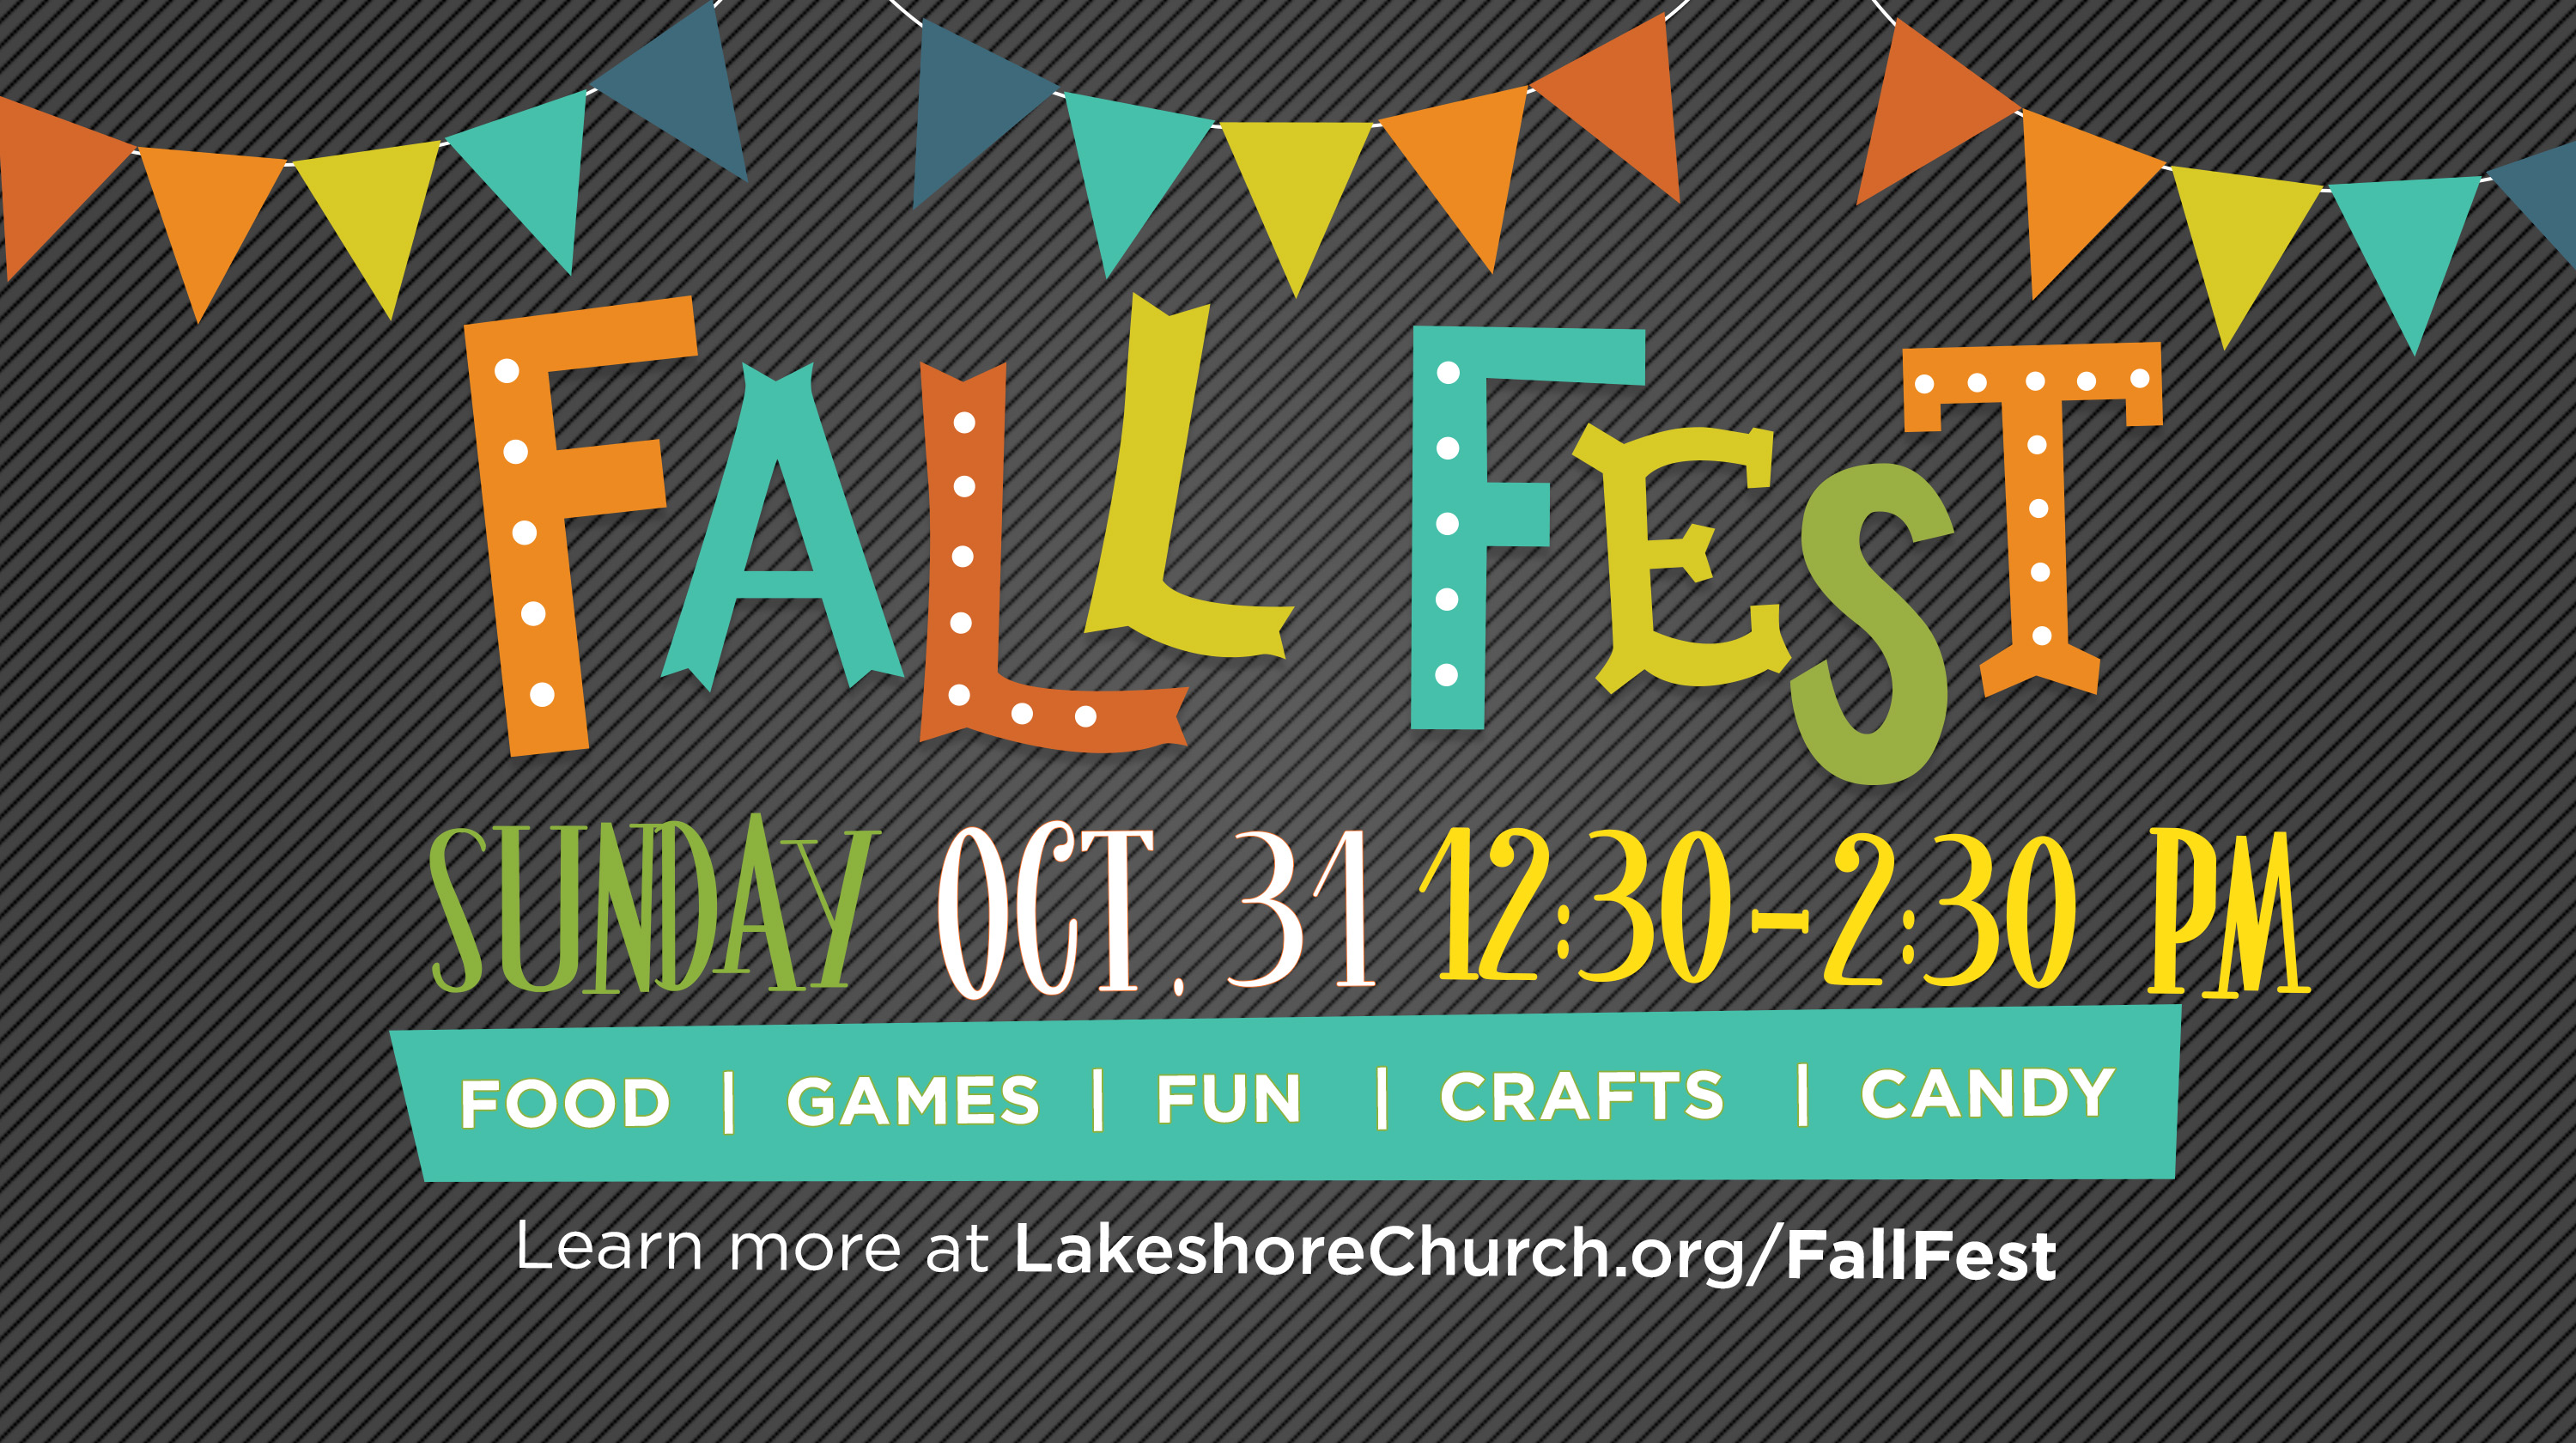 Fall Fest Lakeshore Community Church Rochester NY